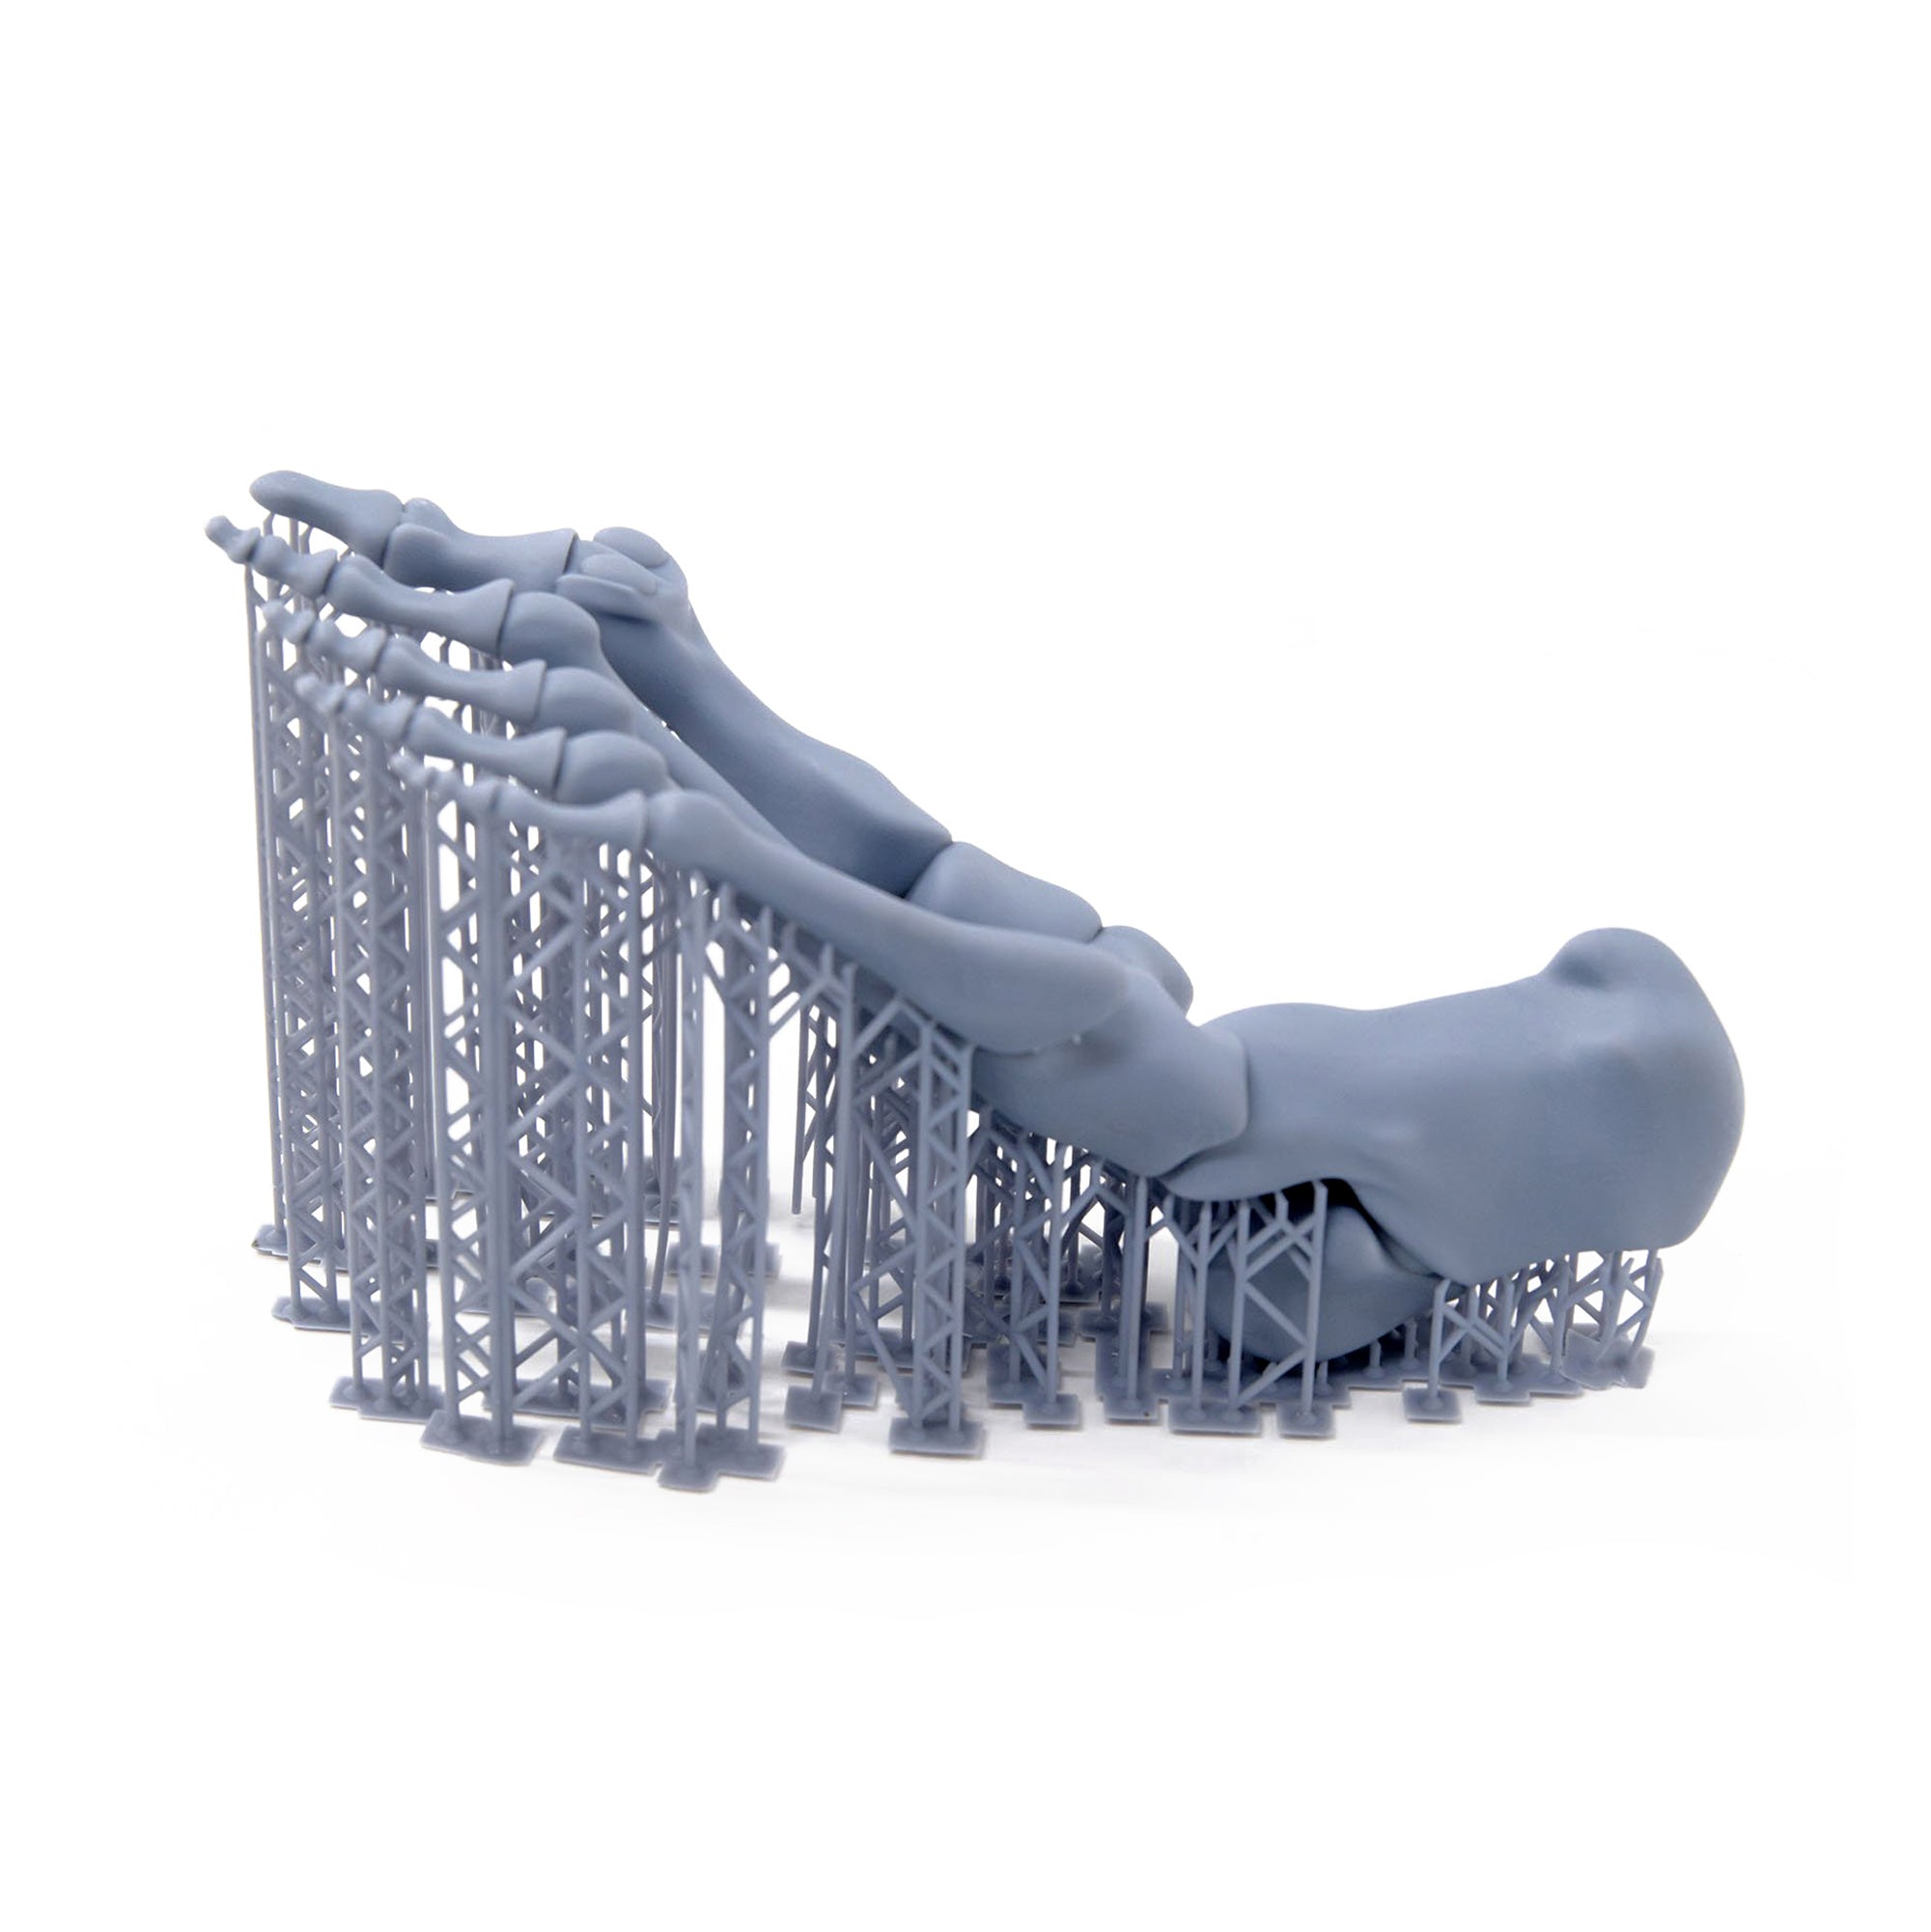 Build Sonic Grey By Siraya Tech- High Resolution Engineering 3D Printing Resin(1kg)